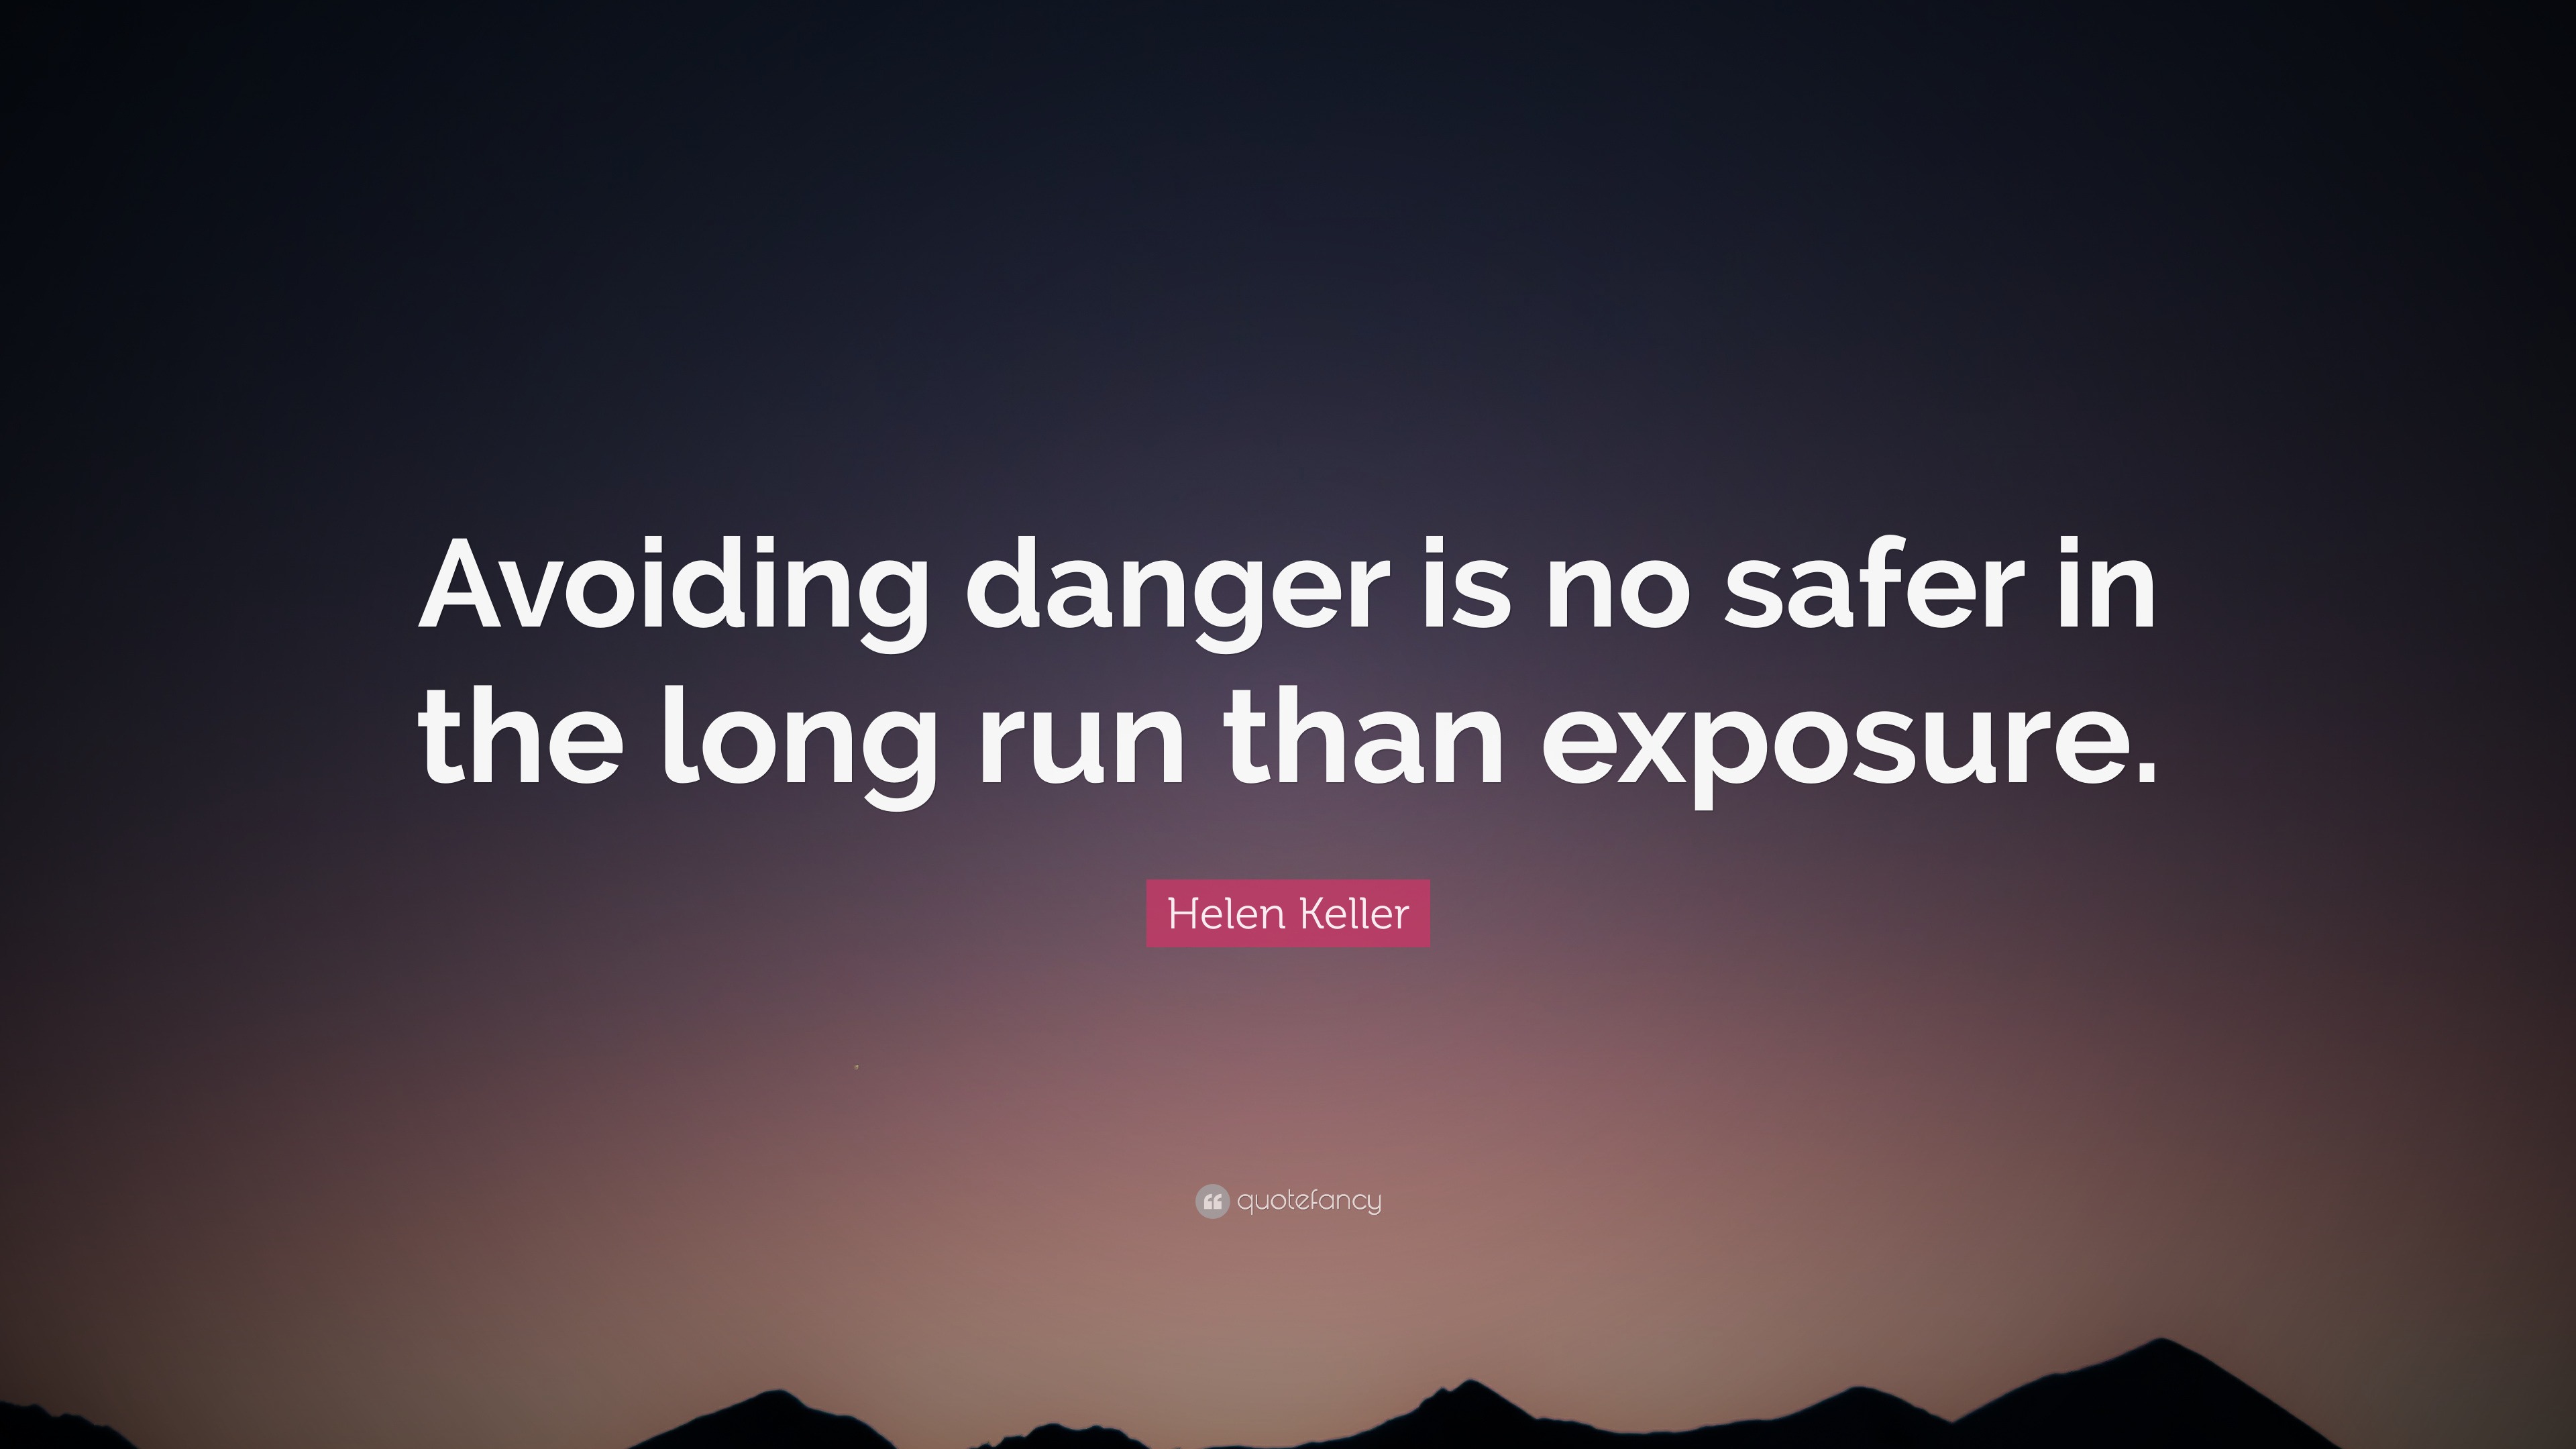 HELEN KELLER "AVOIDING DANGER IS NO SAFER IN THE LONG RUN THAN.." QUOTE PHOTO 